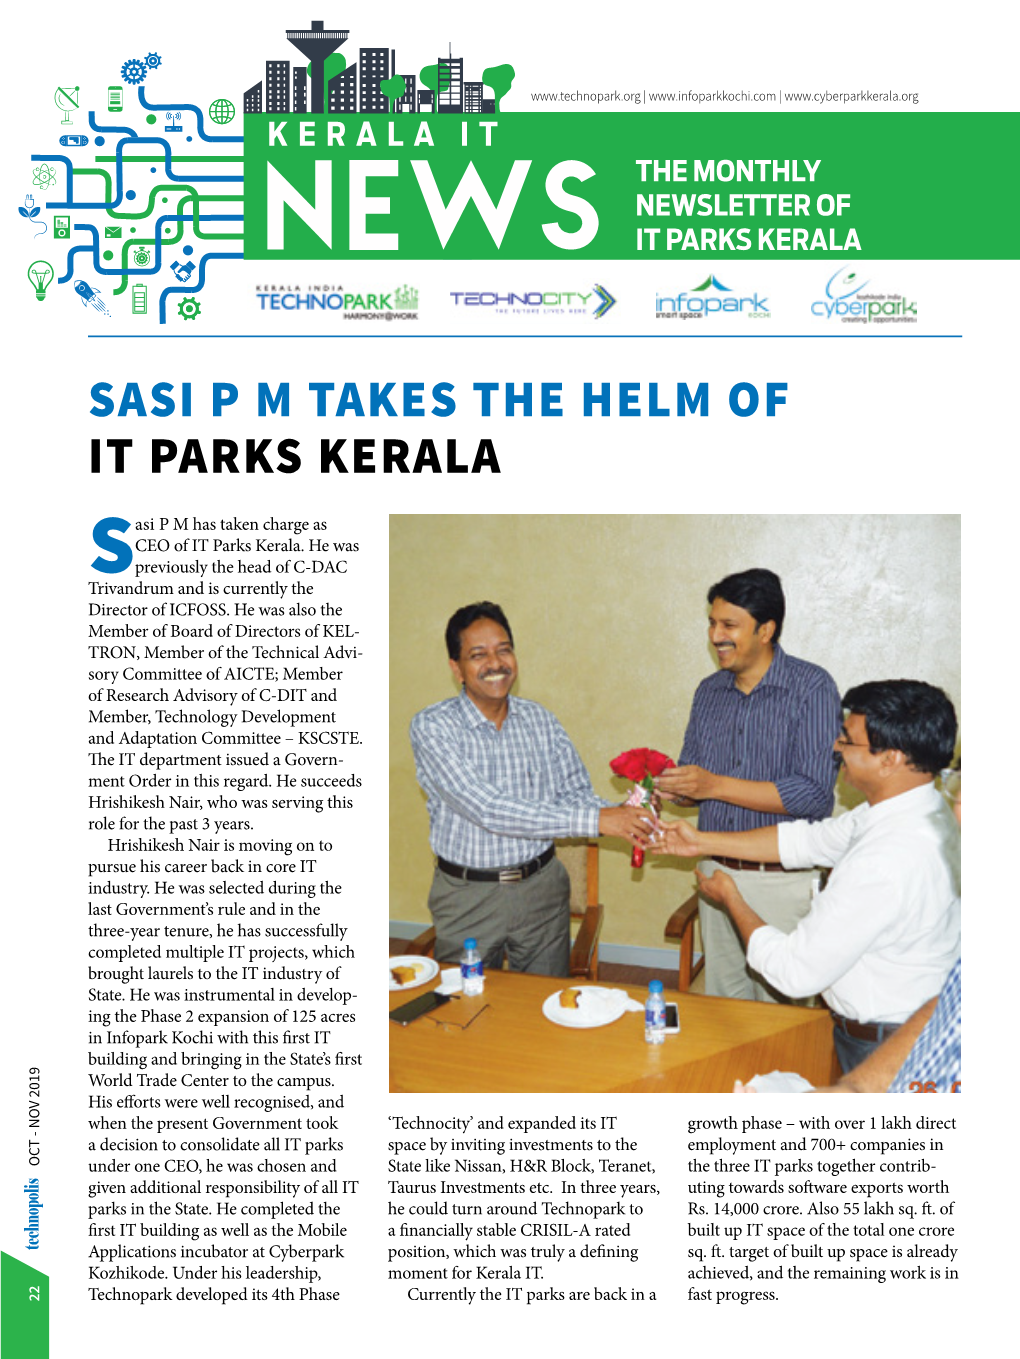 Sasi P M Takes the Helm of It Parks Kerala